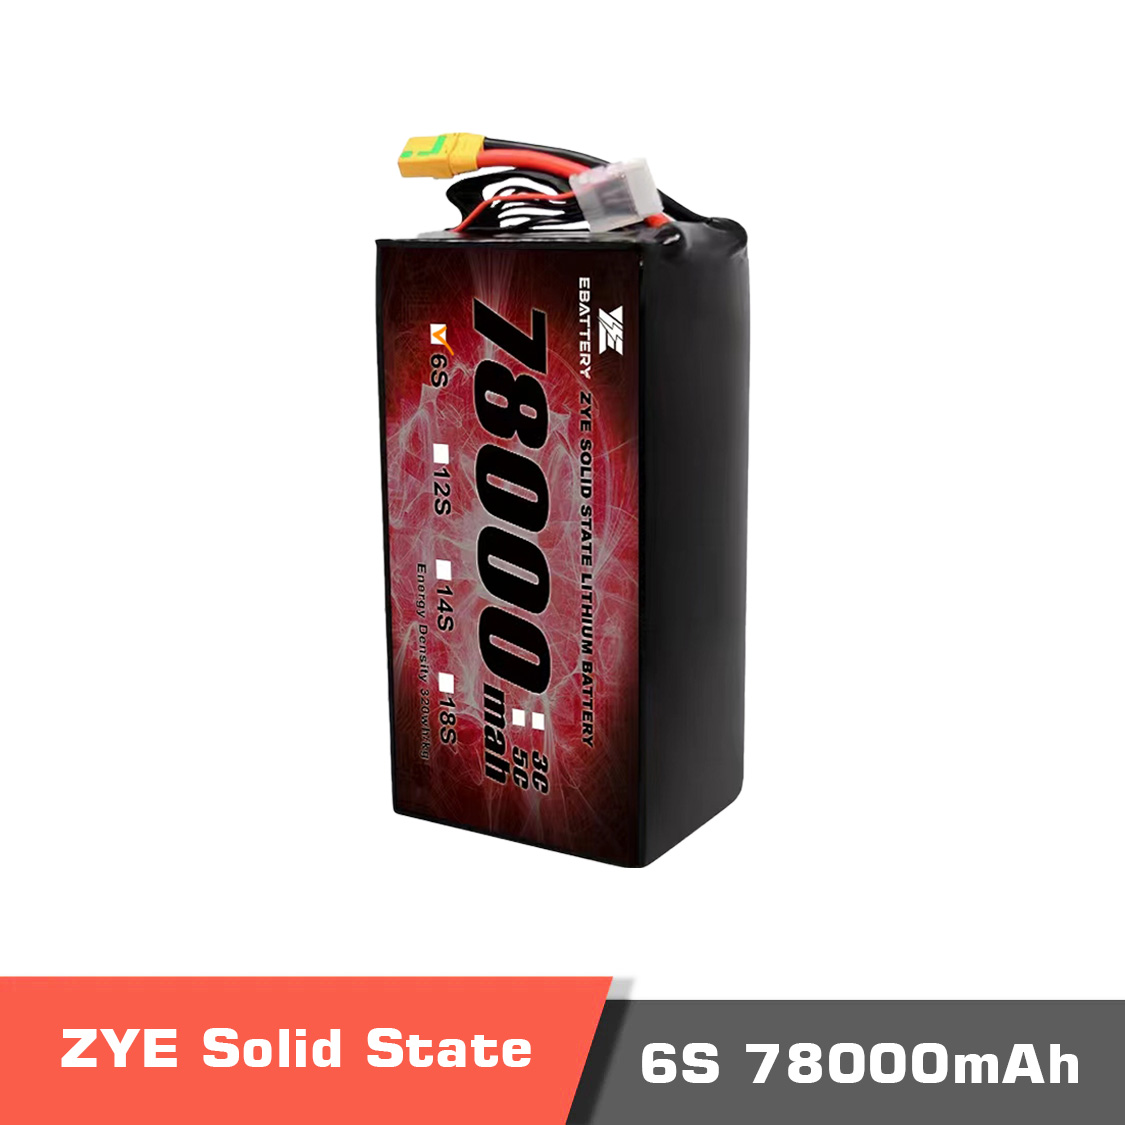 78000 6s temp.2 - ZYE Power Ultra HV Semi Solid-State Battery,Ultra HV Semi Solid-State Battery,6S 78000mAh high voltage LiPo Battery,6S 78000mAh HV LiPo Battery,Solid-state LiPo battery,lipo battery,drone battery,6s battery,high energy density battery,UAV,drone,vtol,ZYE Power,ZYE power Battery - MotioNew - 1